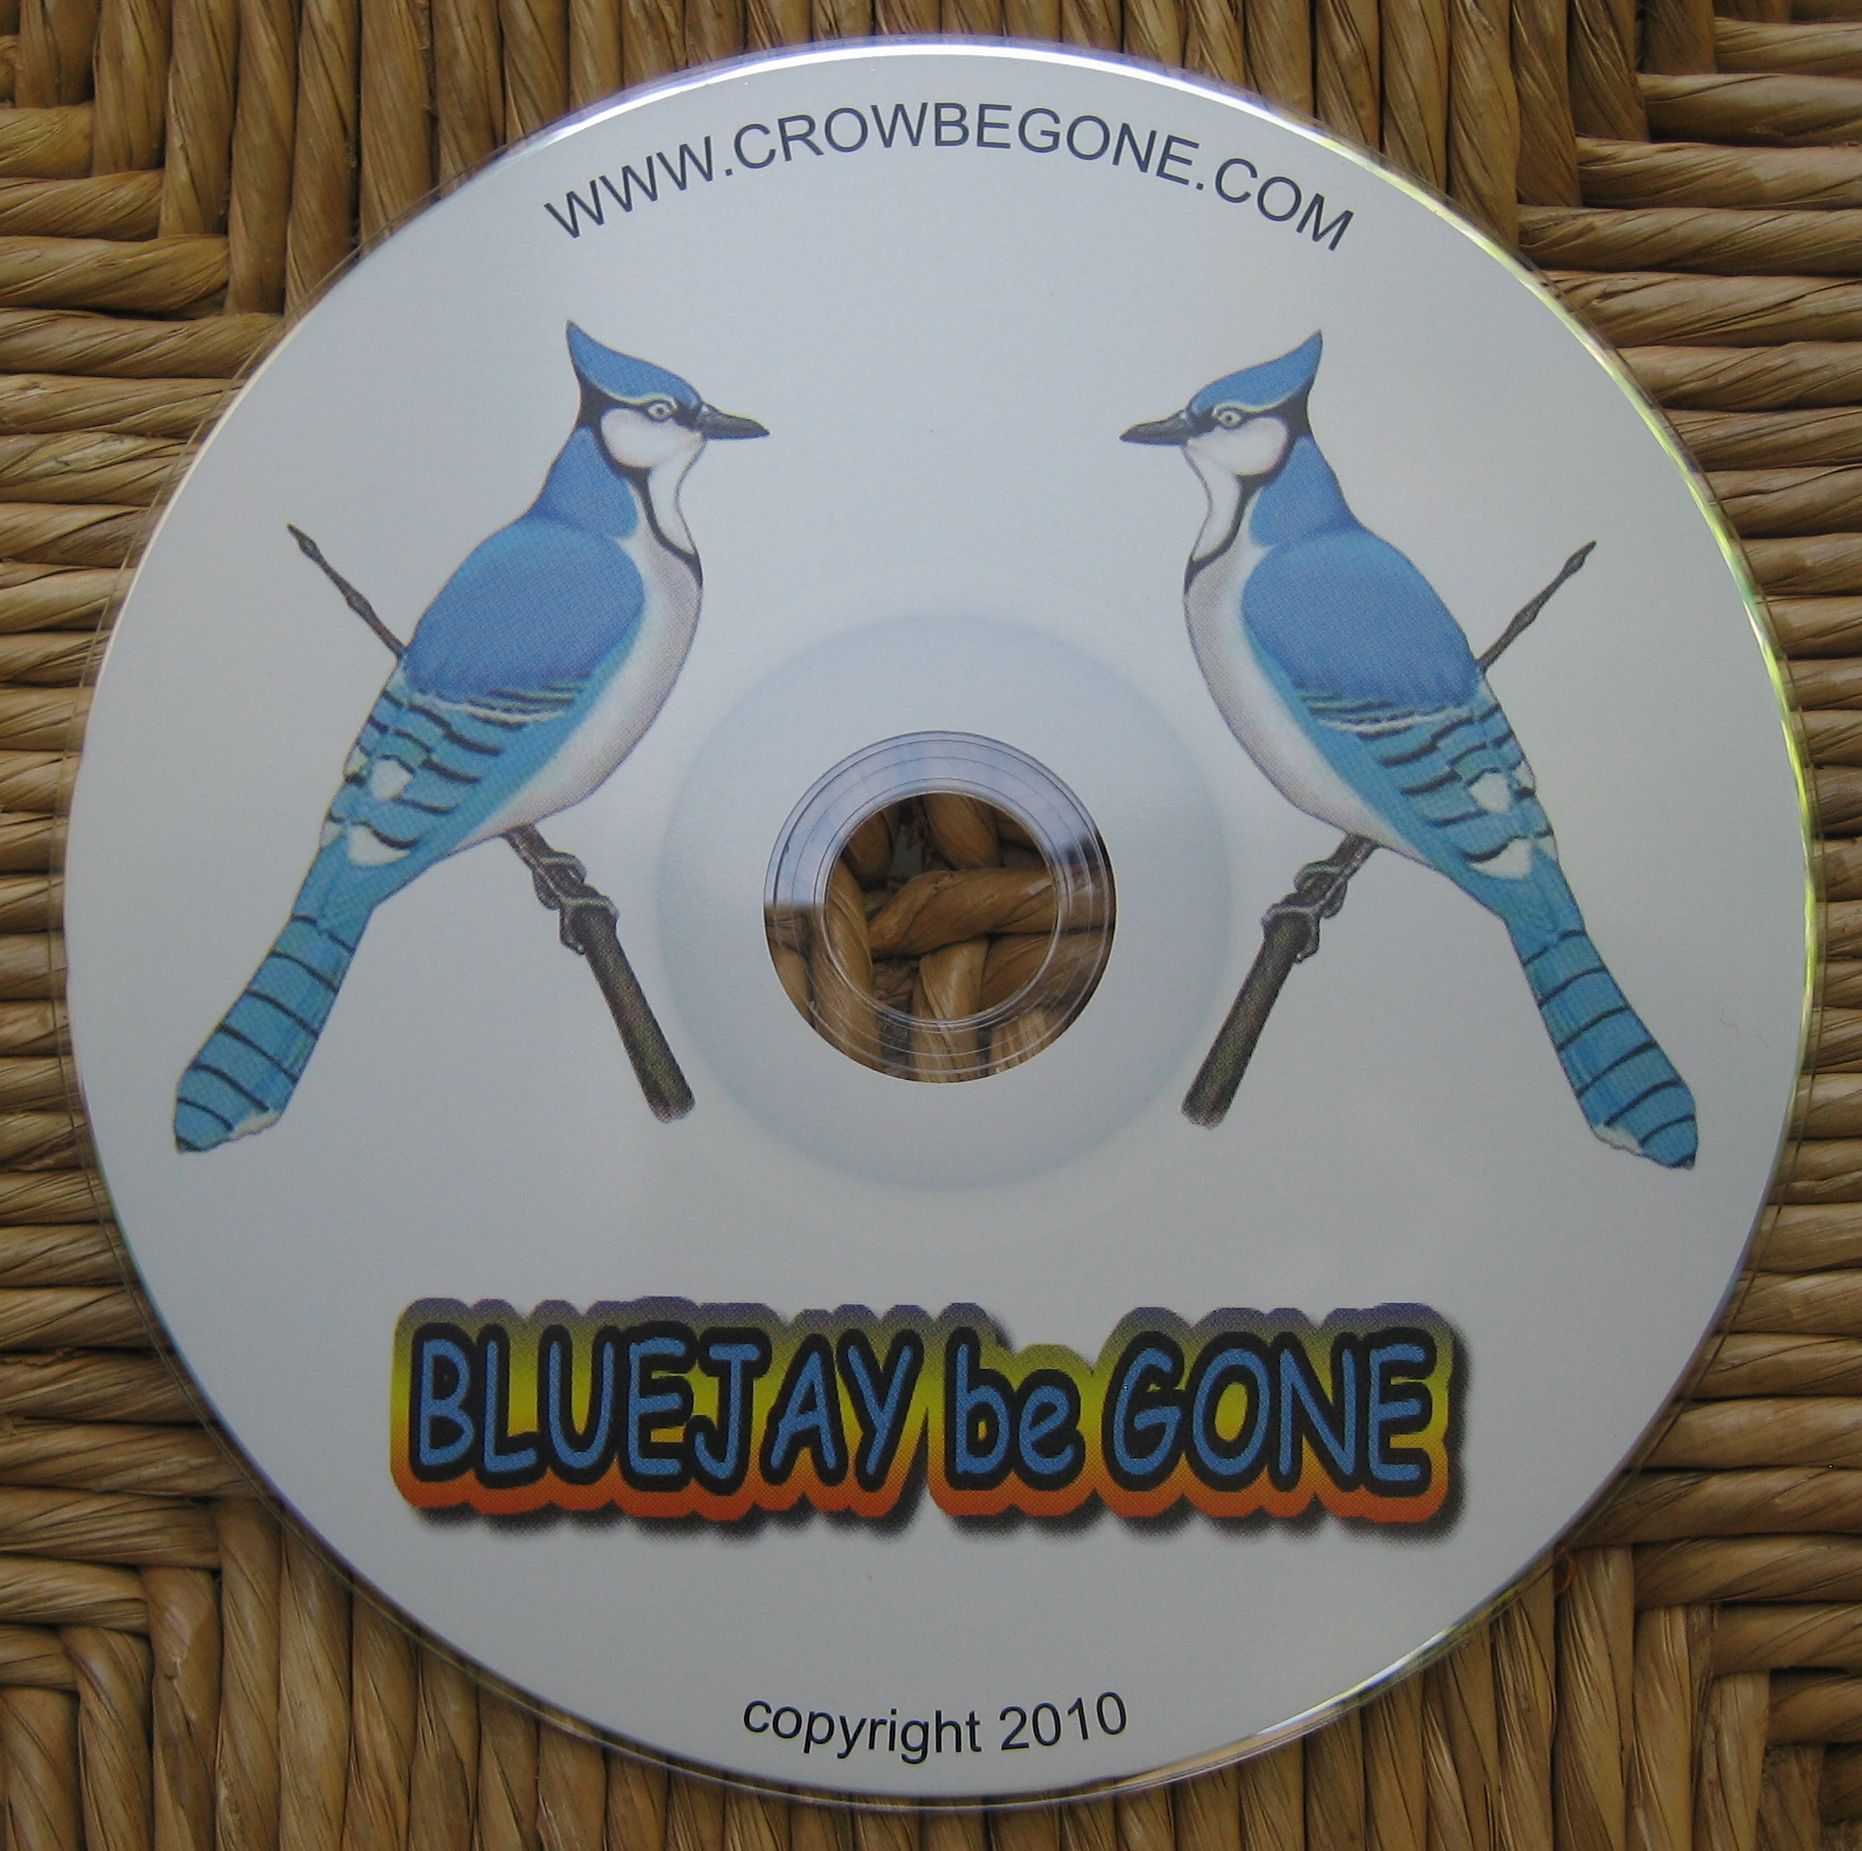 Blue Jay be Gone logo